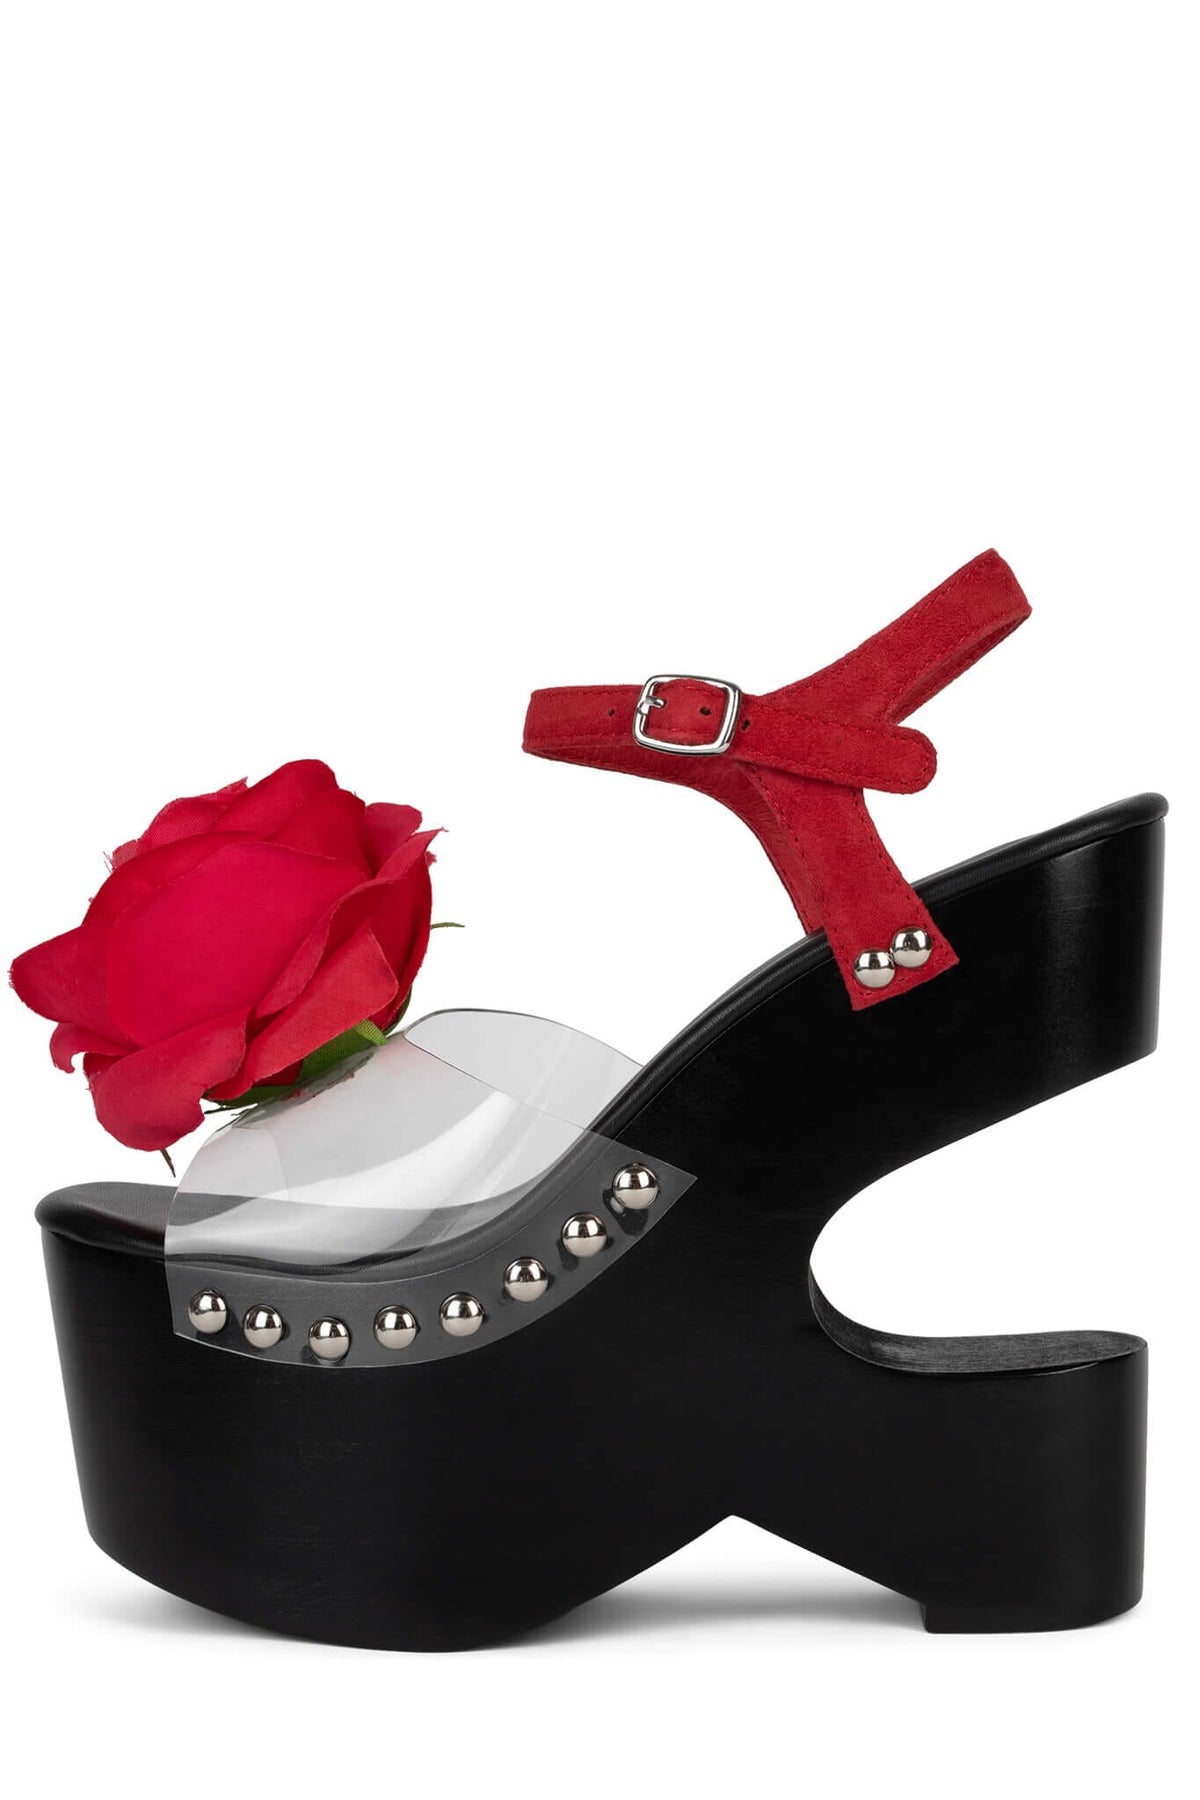 ROCKABILLY Jeffrey Campbell Platform Sandals Clear Red Black